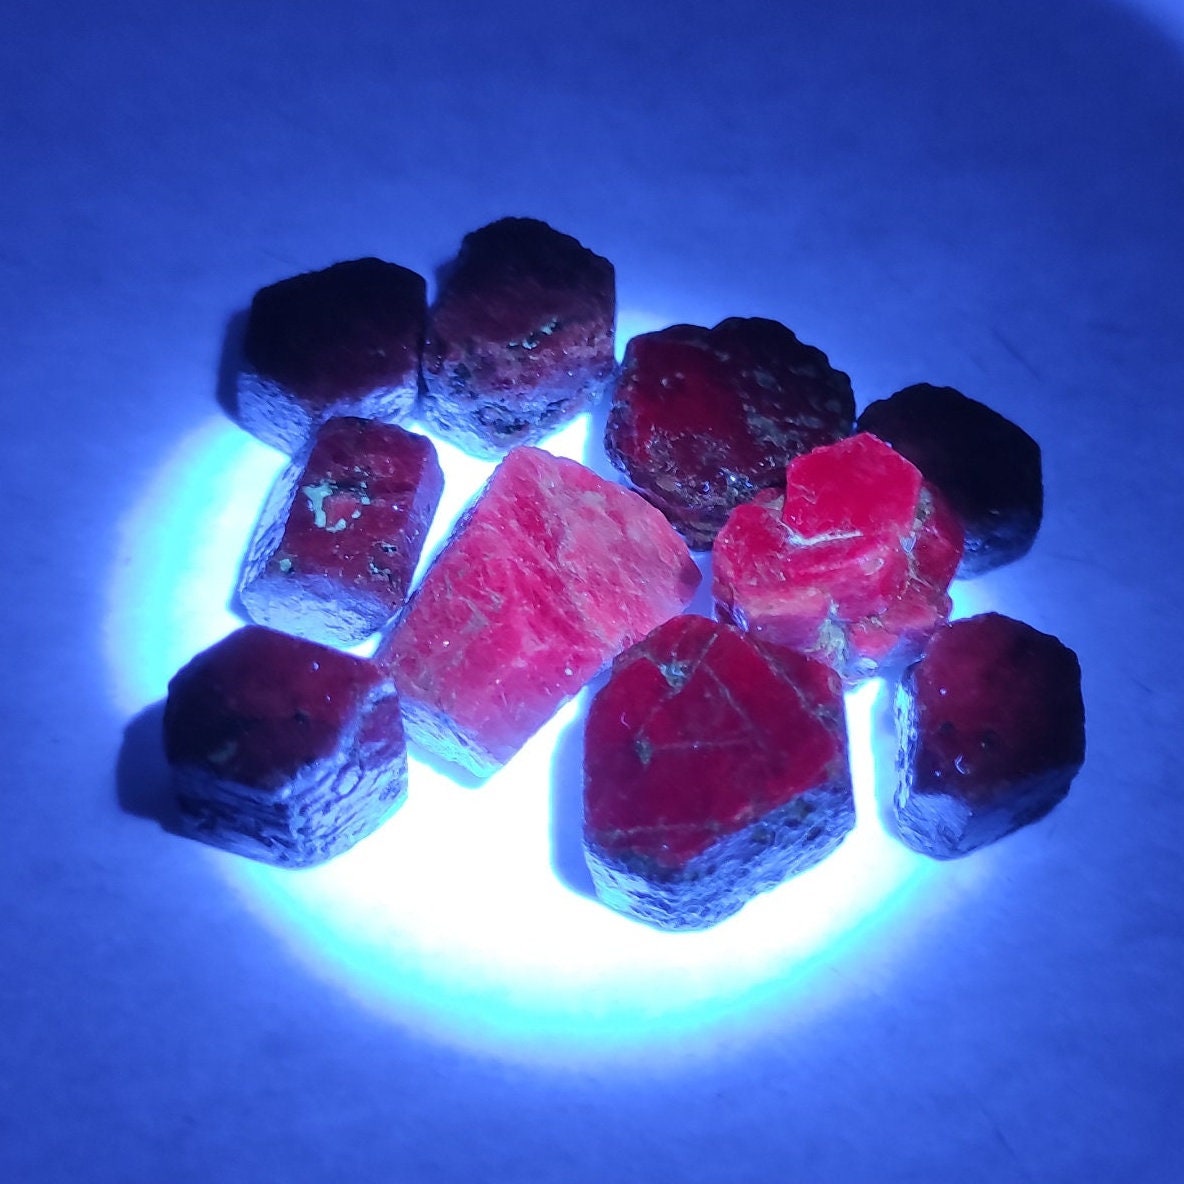 107ct Untreated Ruby Lot - Unheated Ruby Gemstones - Raw Red Ruby from Madagascar - Rough Rubies Gems - Loose Ruby Gemstones - Rough Gems